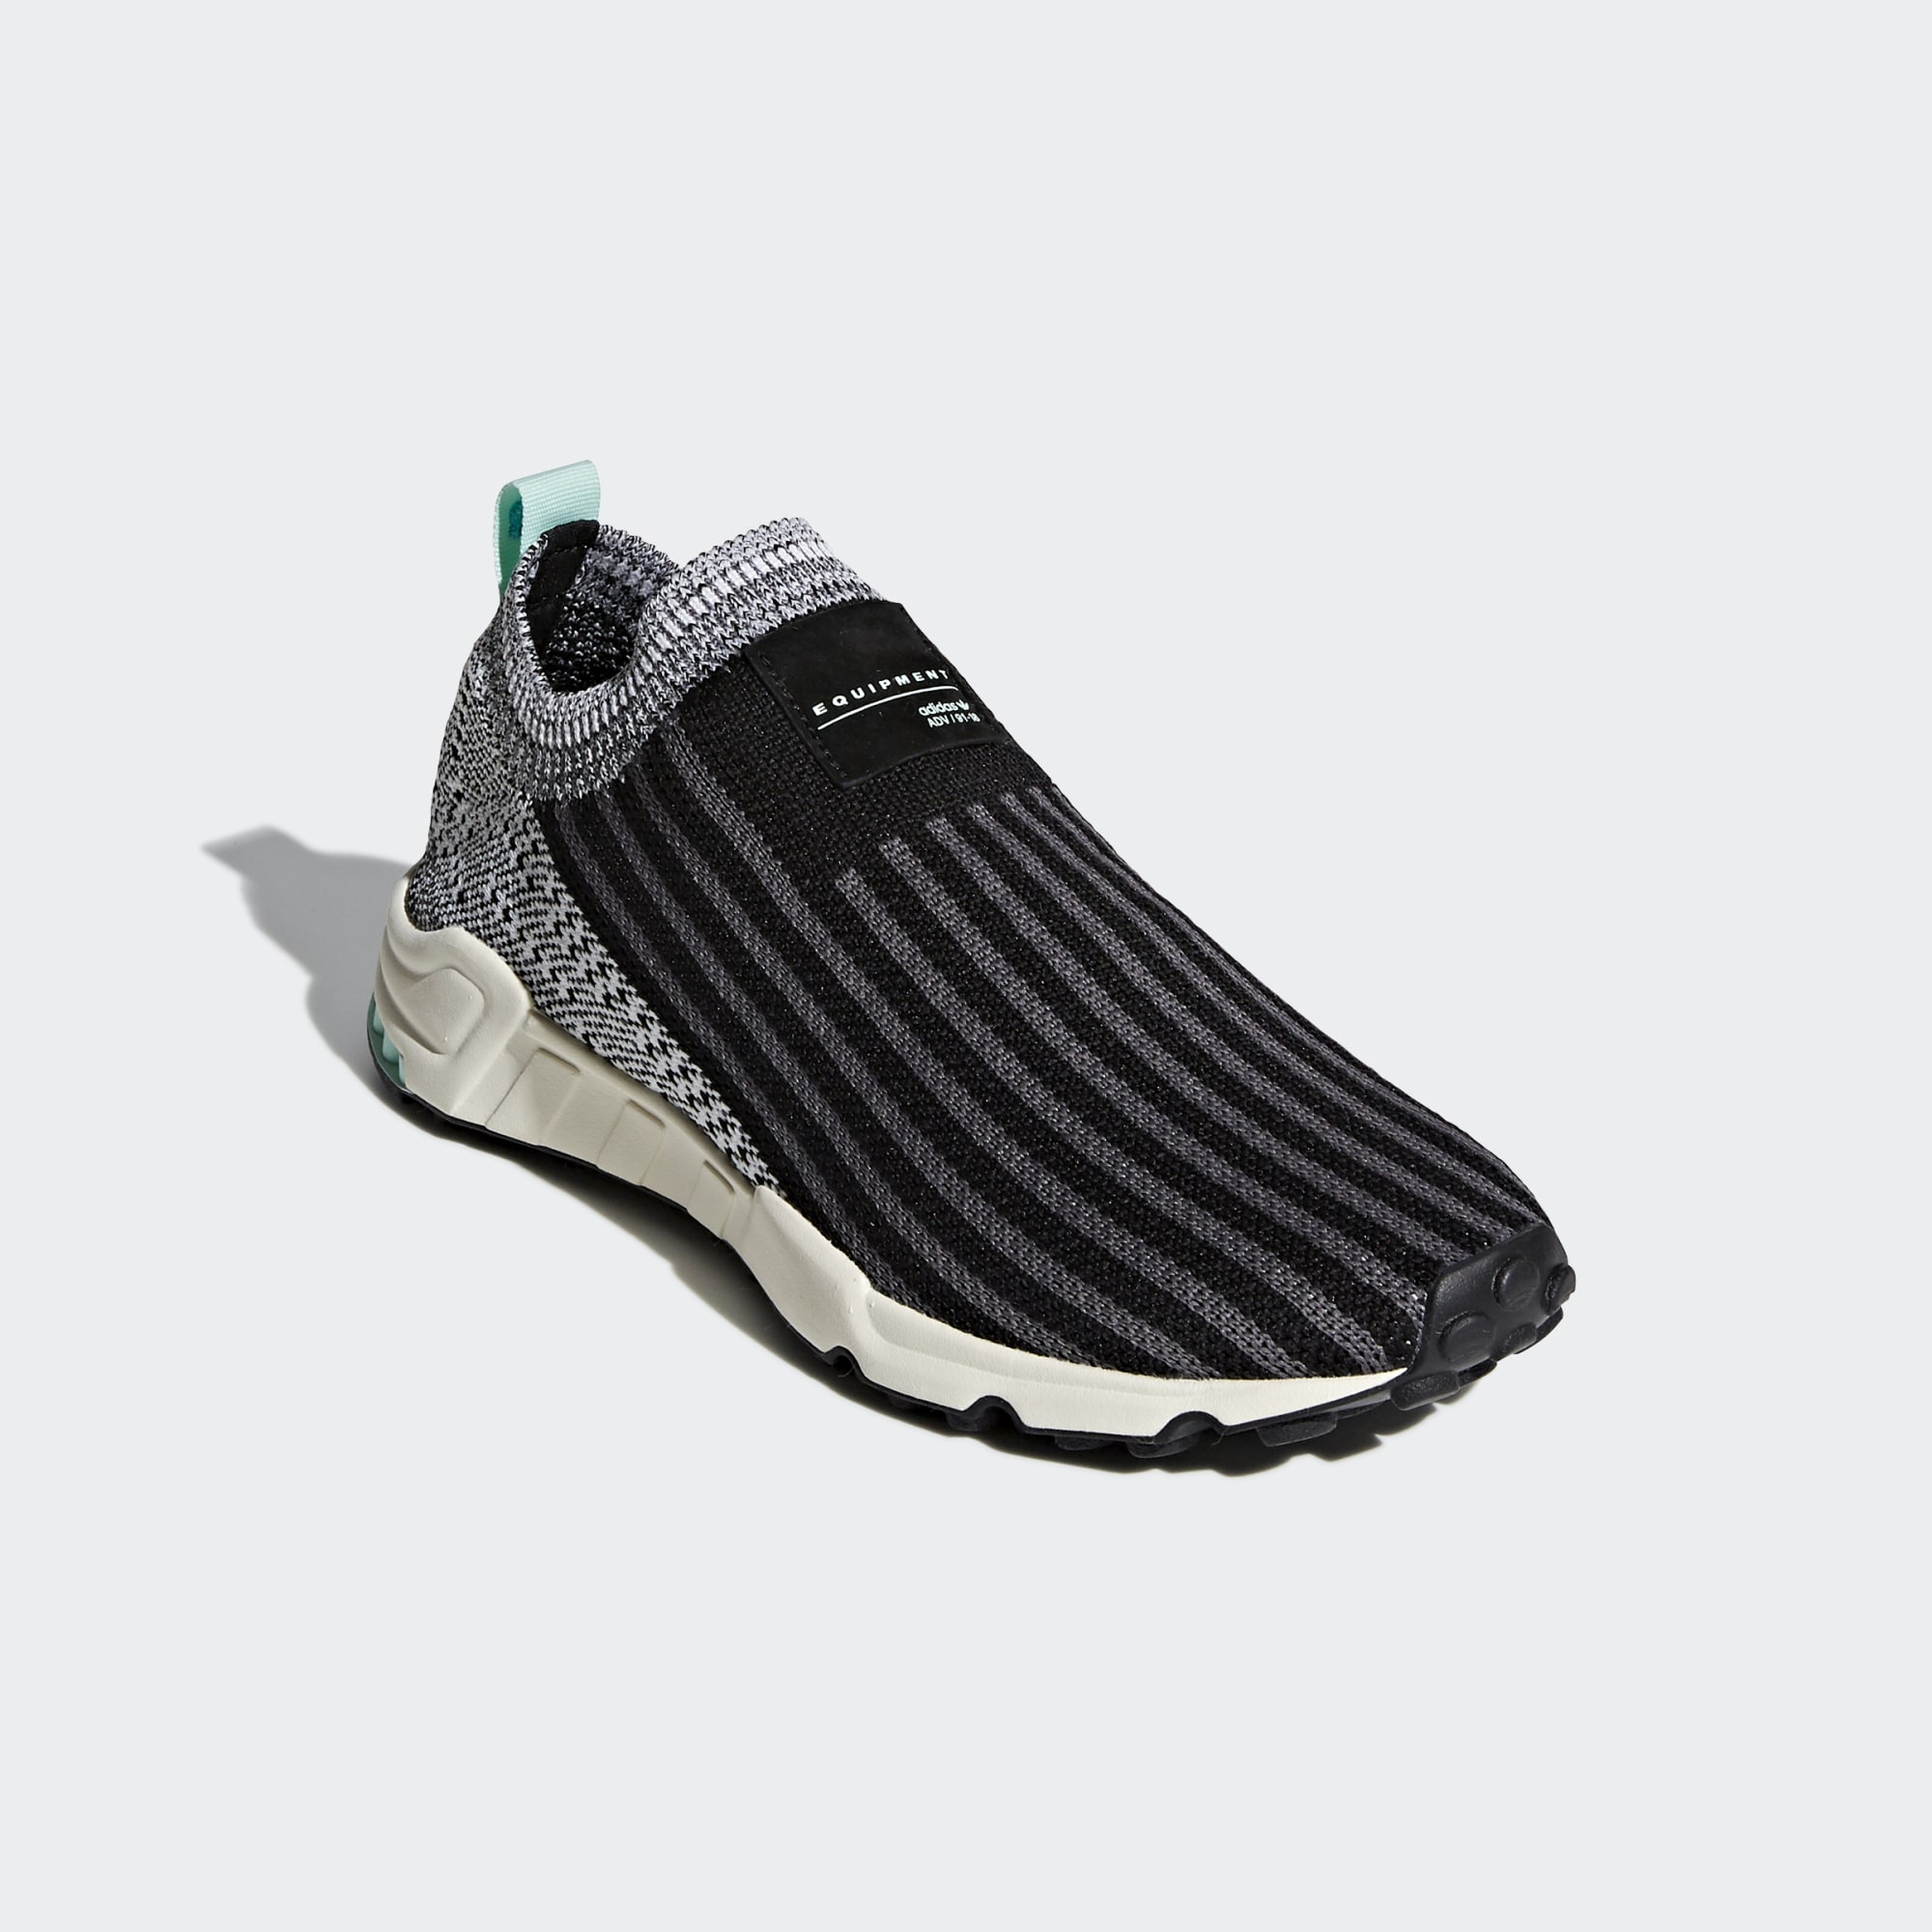 adidas support sock primeknit